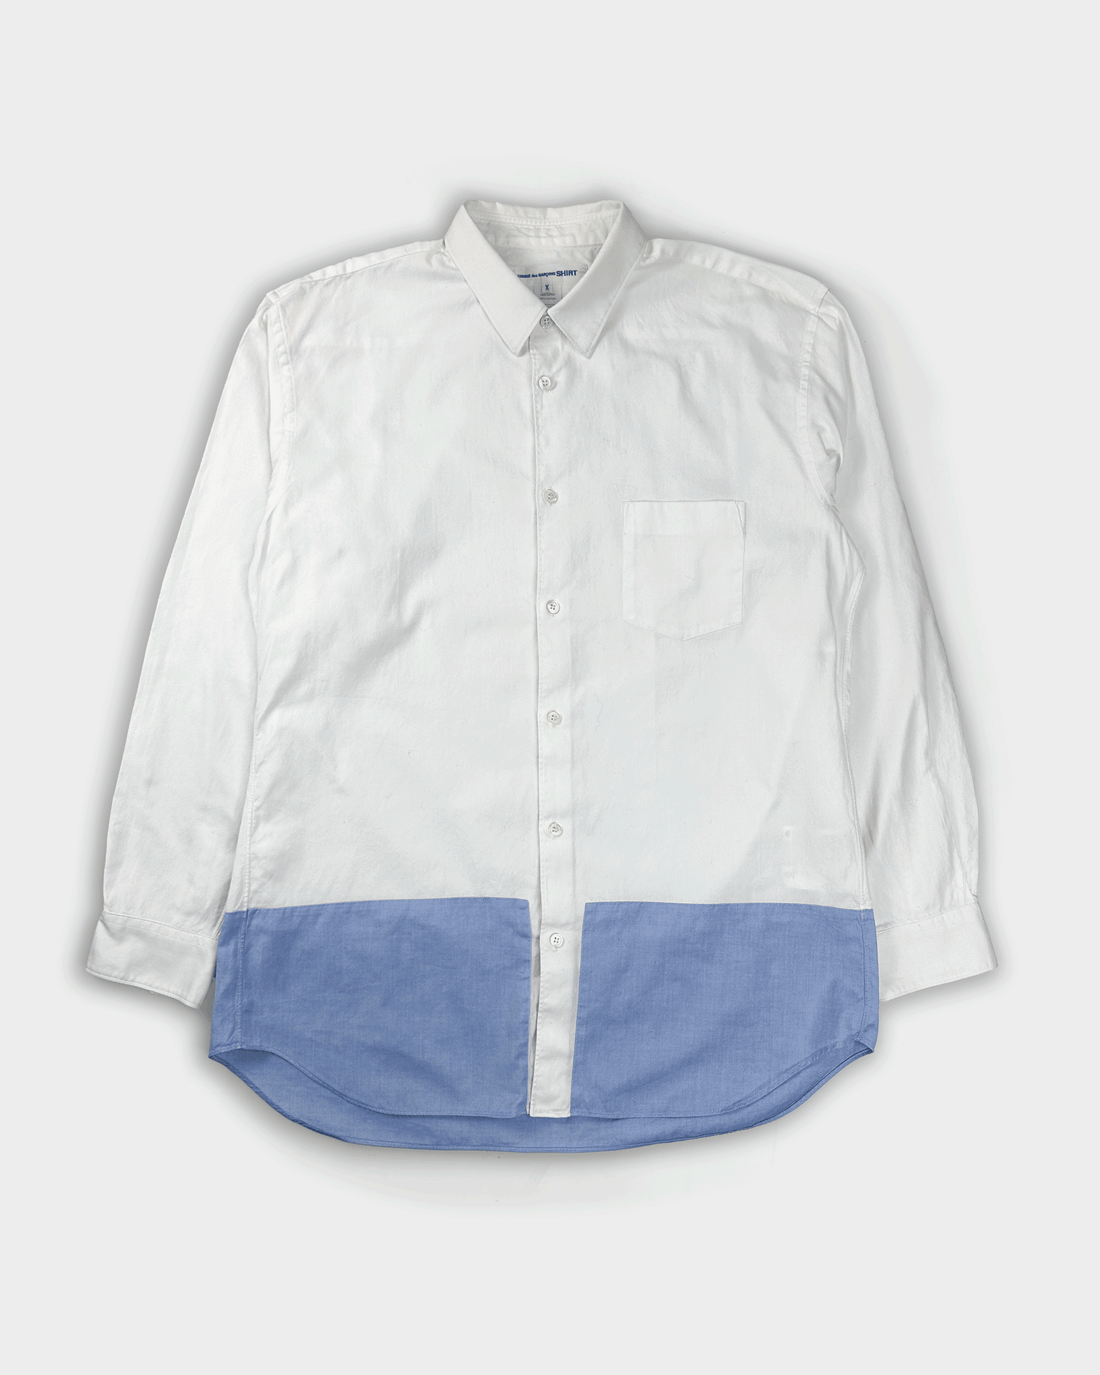 Comme des Garçons Shirt 2-Texture White Shirt 2000's